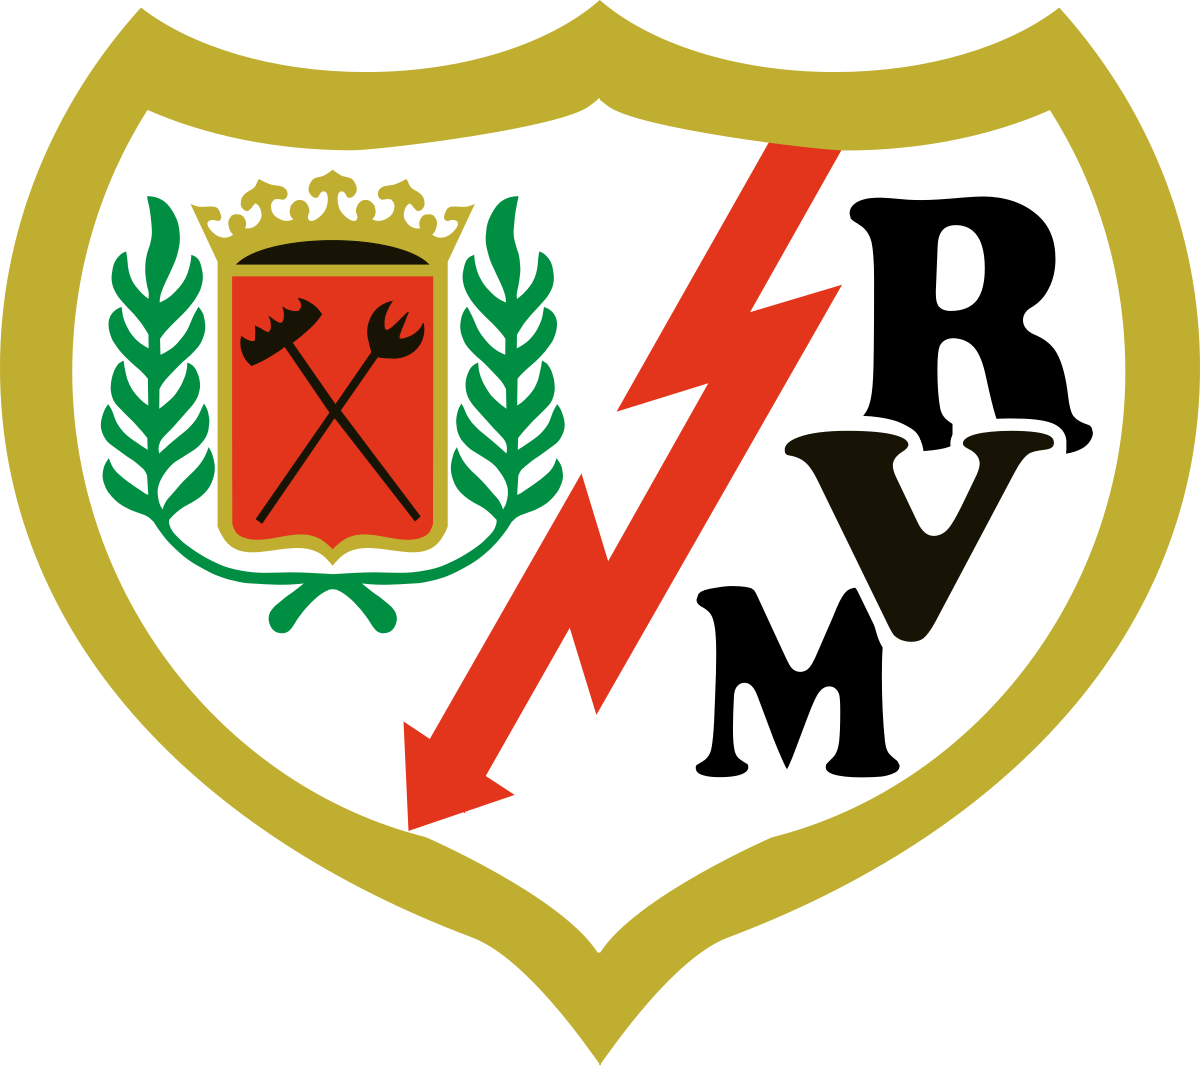 https://upload.wikimedia.org/wikipedia/en/thumb/d/d8/Rayo_Vallecano_logo.svg/1200px-Rayo_Vallecano_logo.svg.png